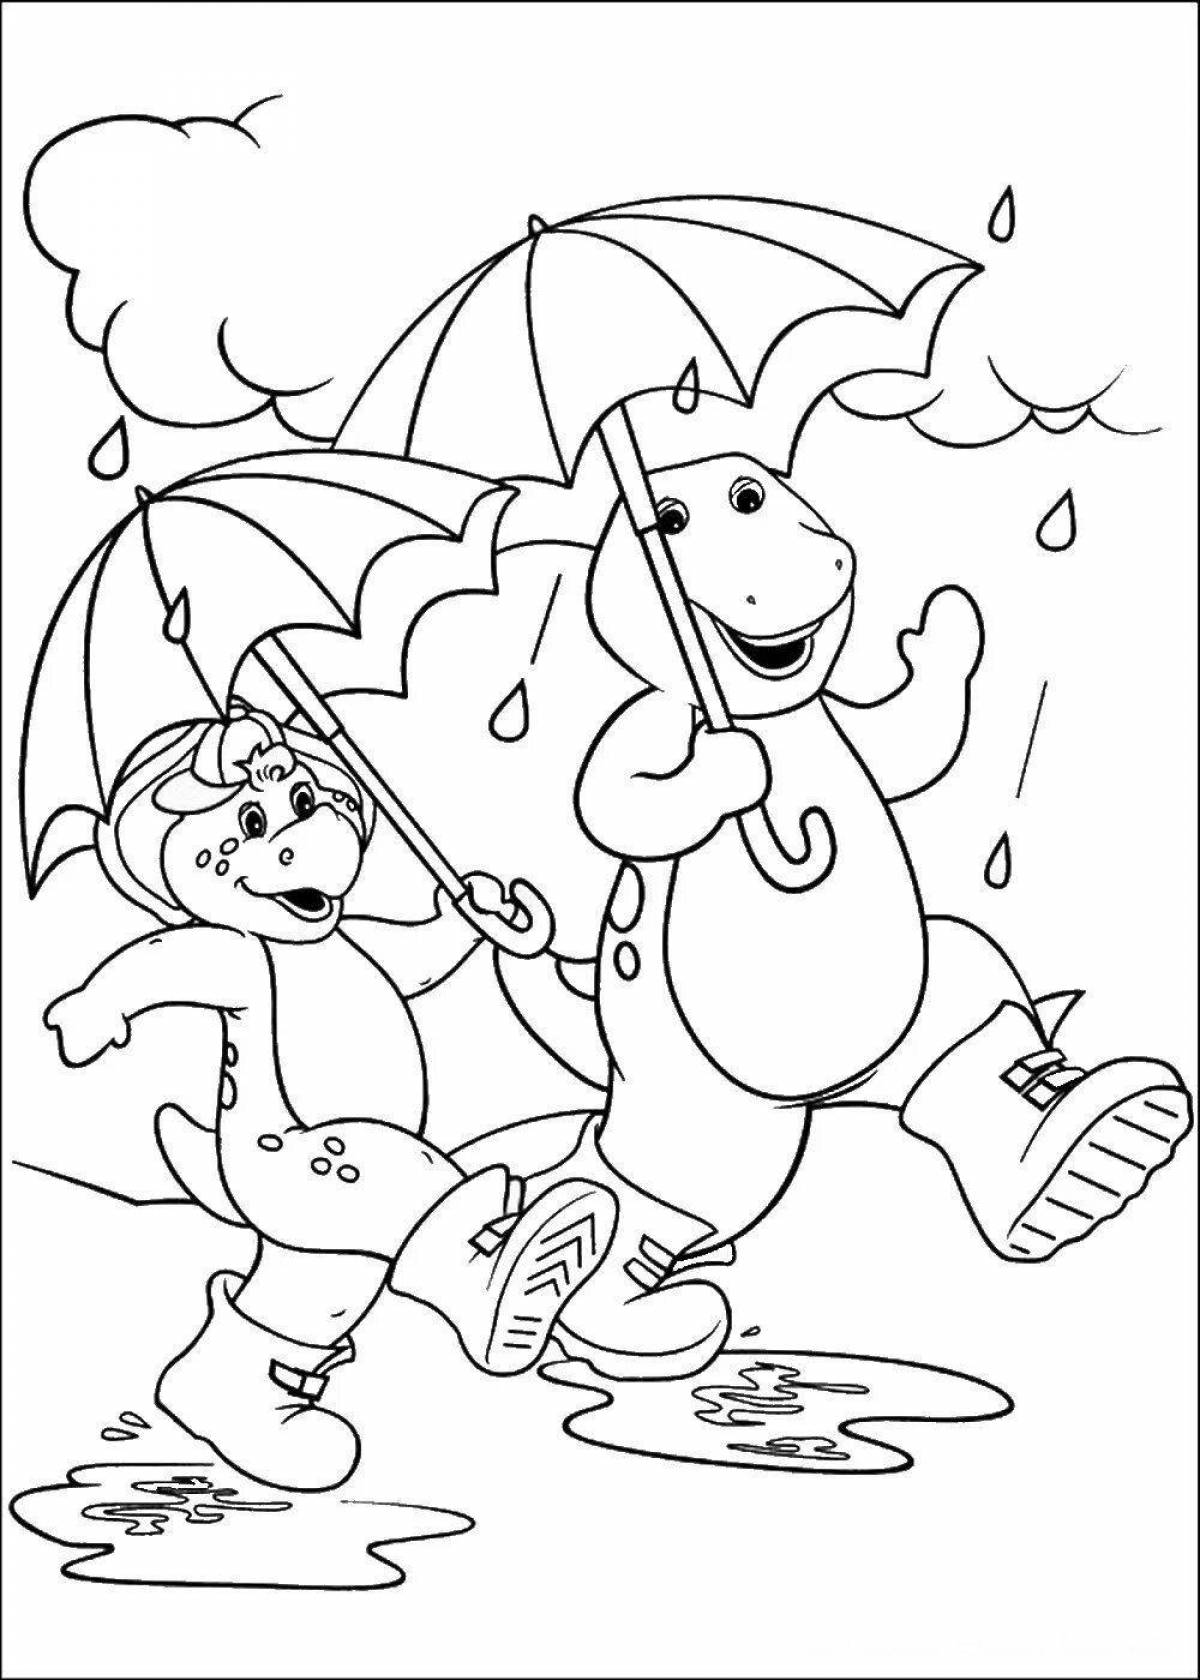 Barney wavy bear coloring page